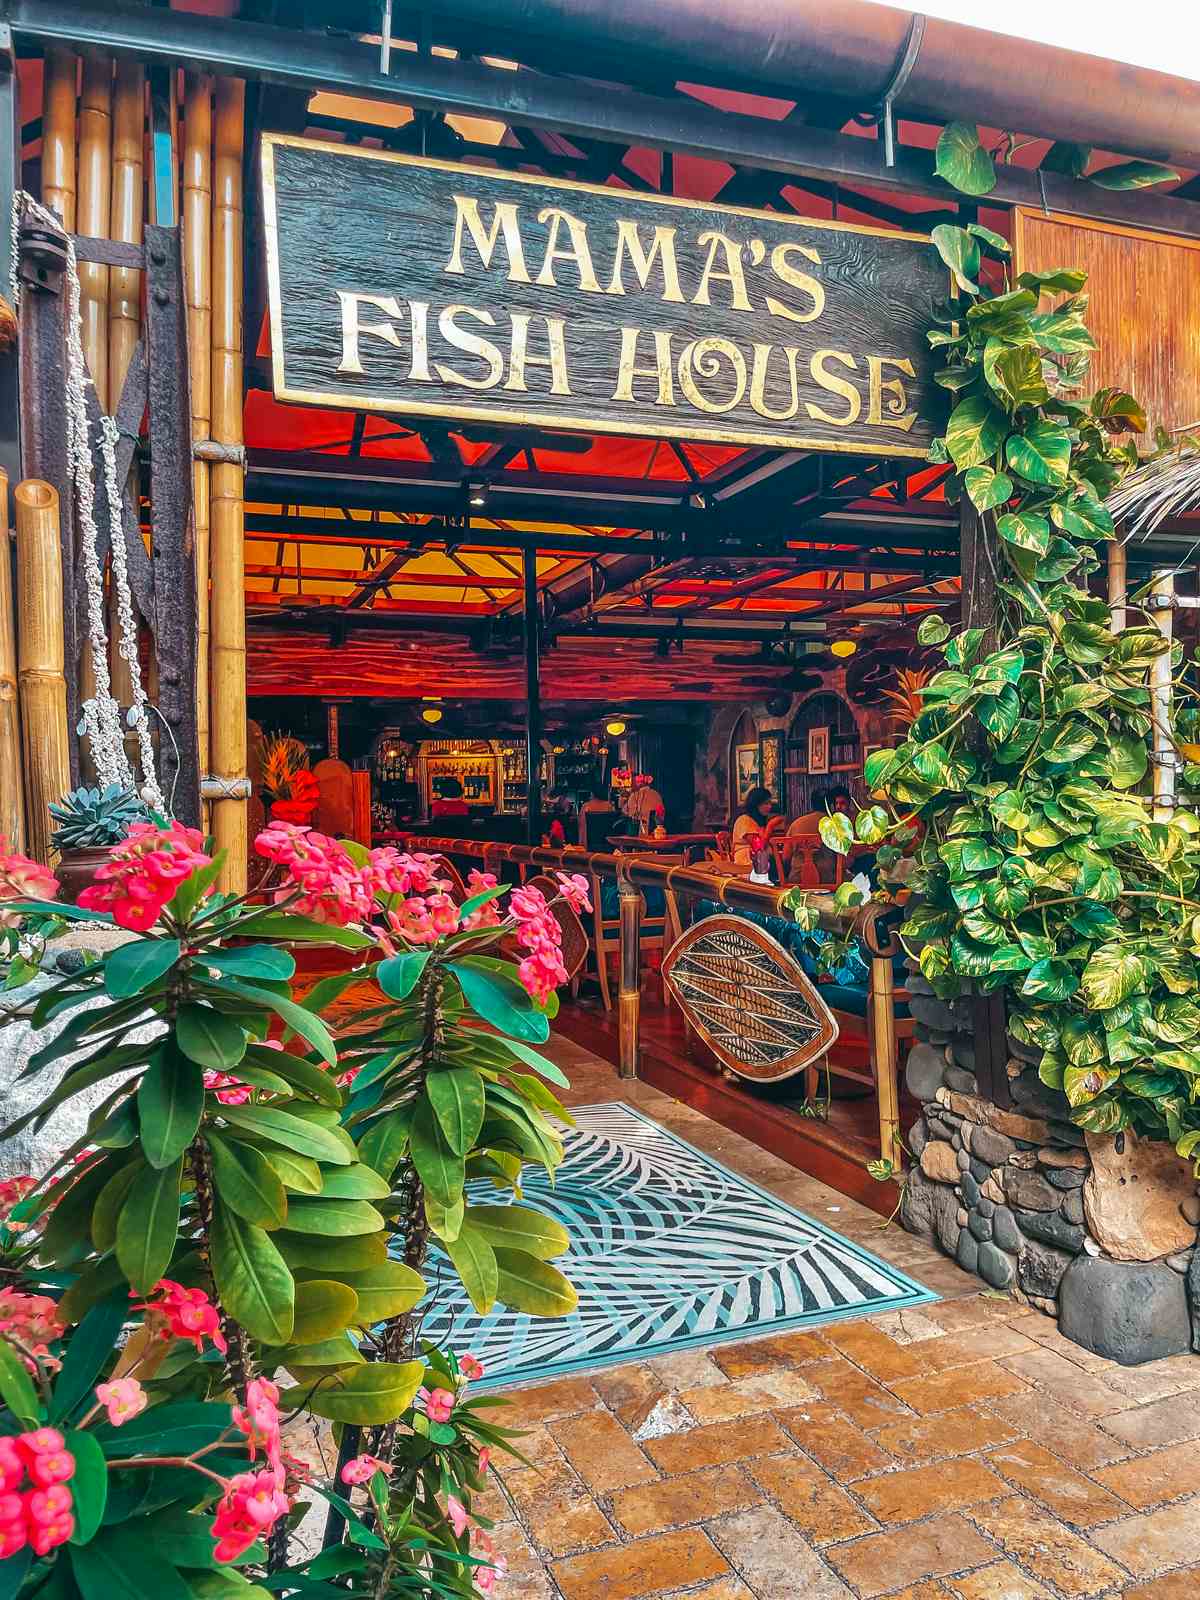 Mamas Fish House restaurant on Maui